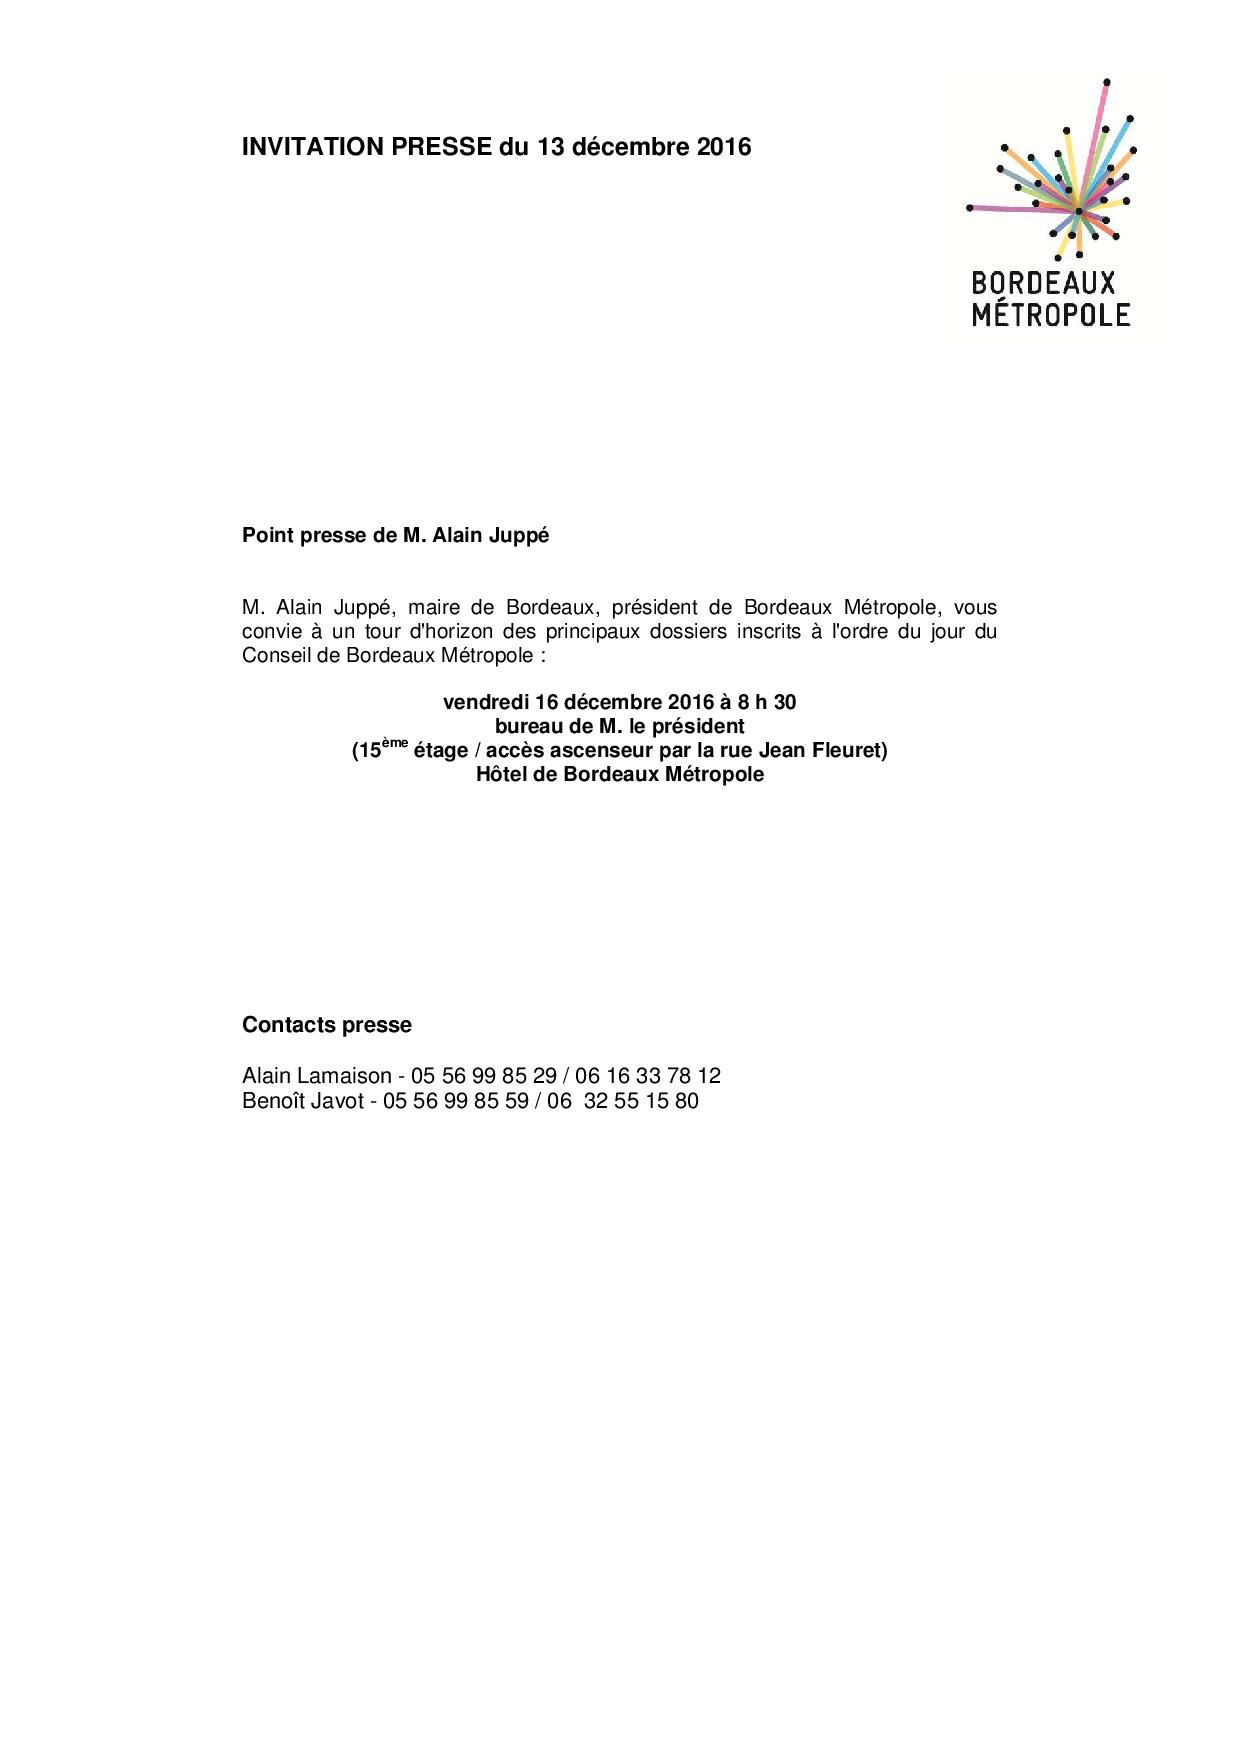 cp-invitation-presse-conseil-bordeaux-metropole-13-12-2016-page-001